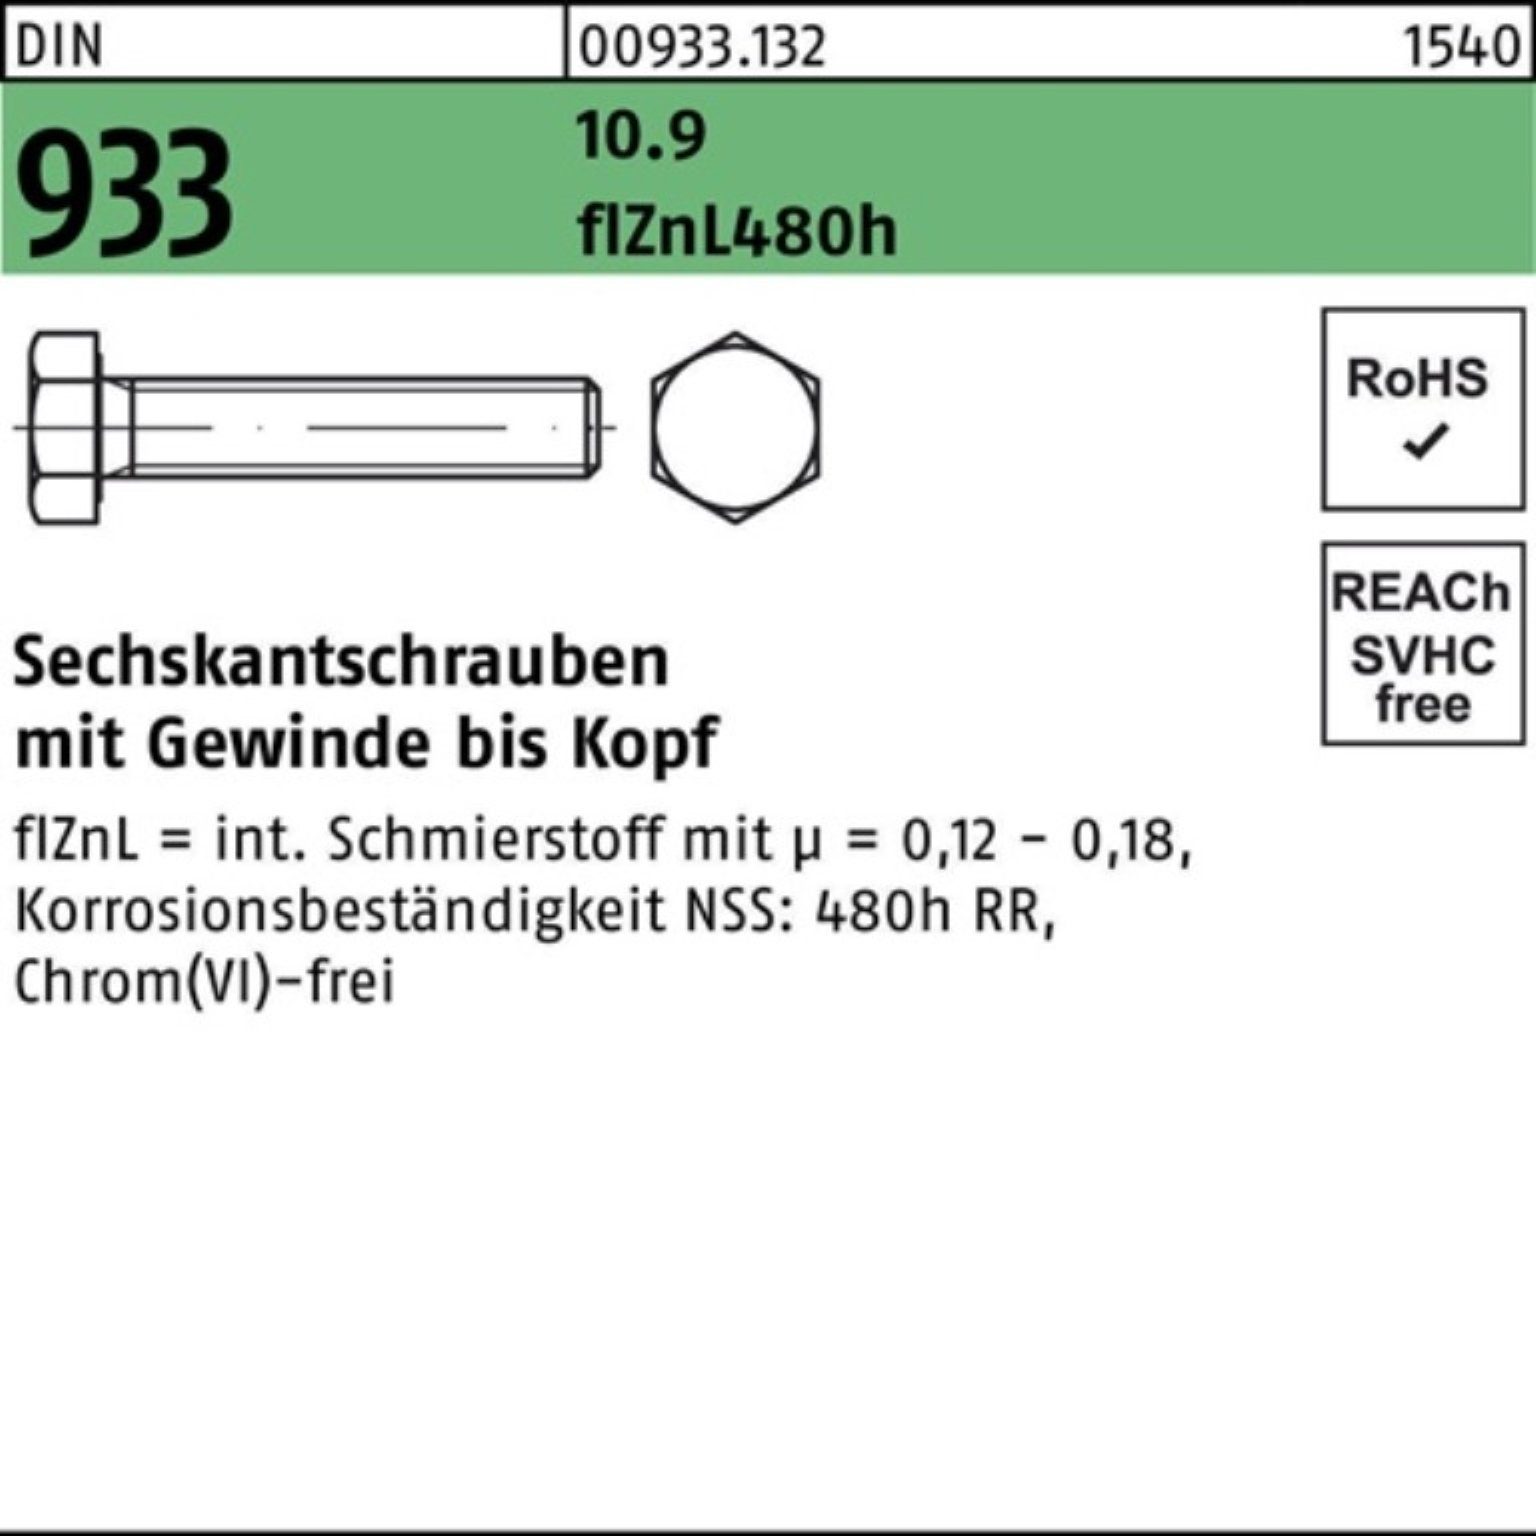 933 200er Sechskantschraube VG Sechskantschraube 35 DIN Pack 10.9 flZnL/nc/x/x/480h M8x Reyher